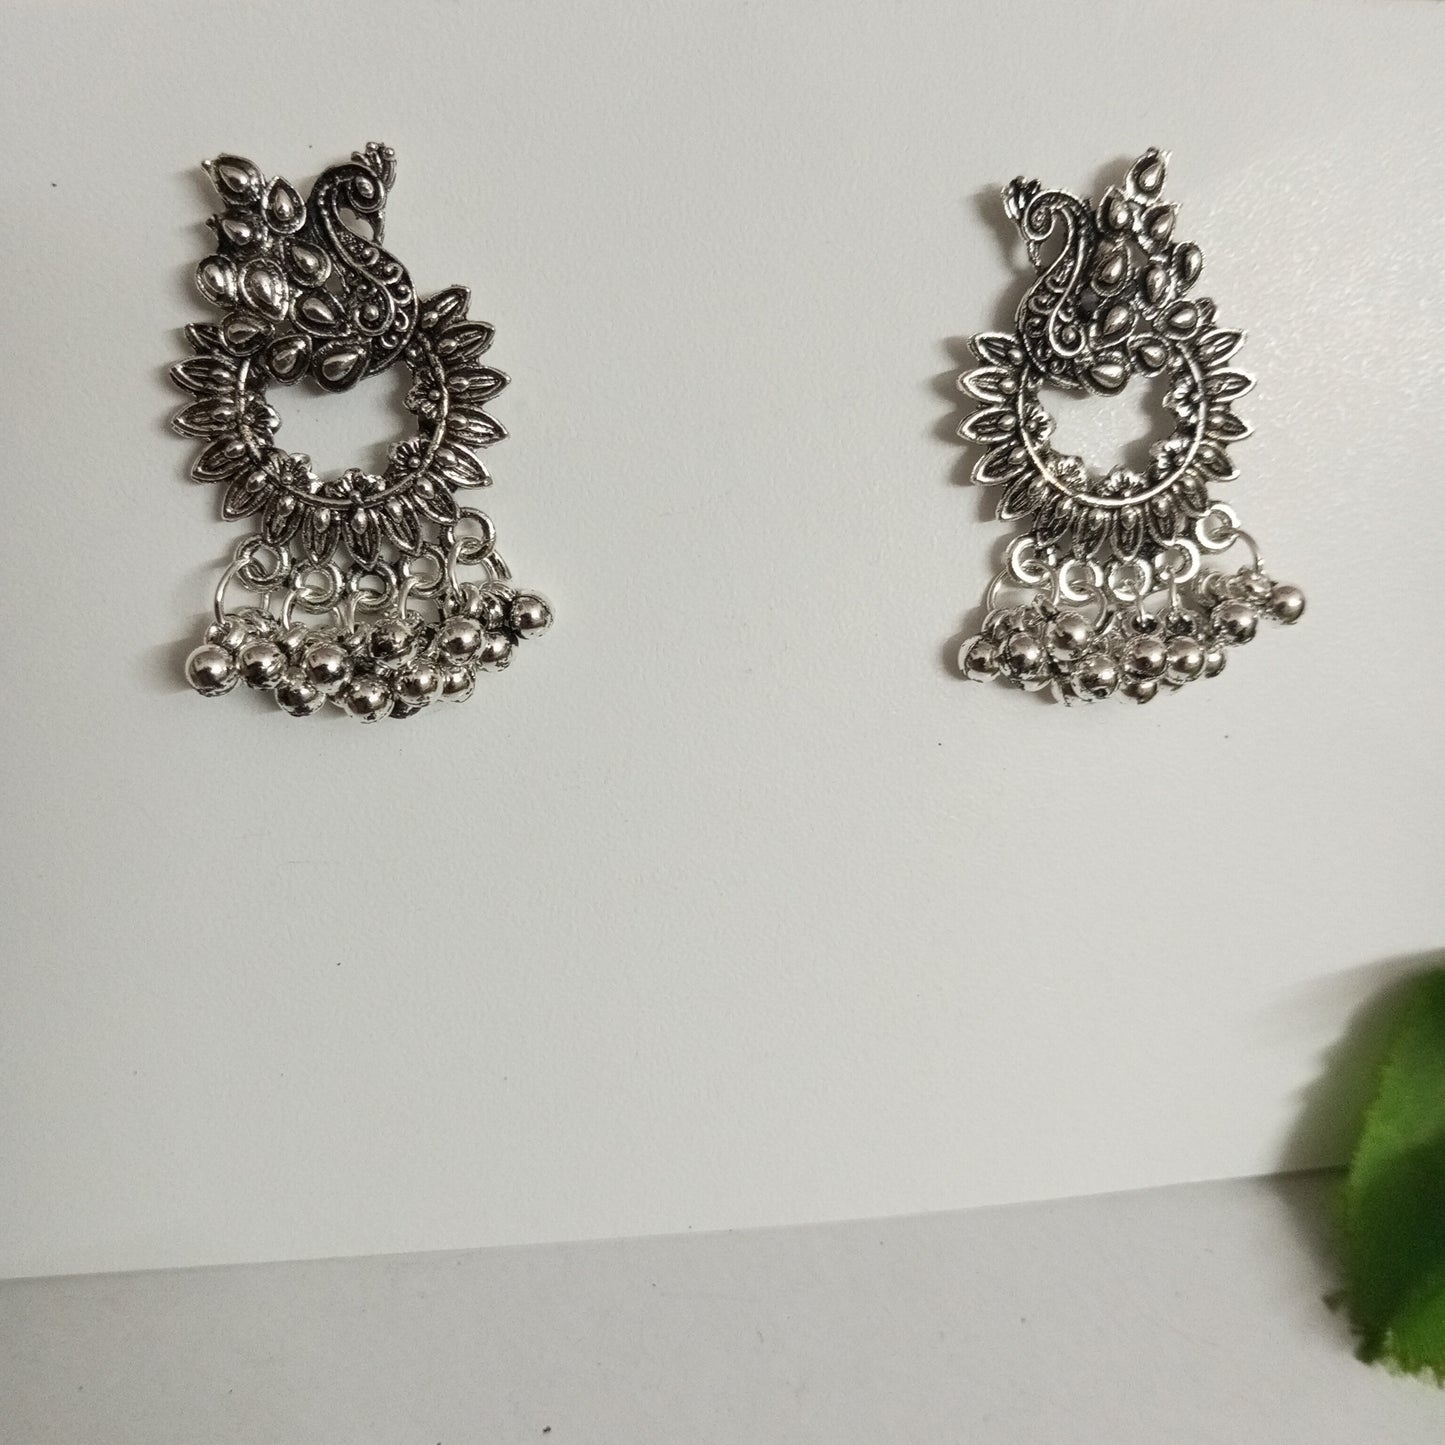 Oxidised Look Earrings Small Peacock